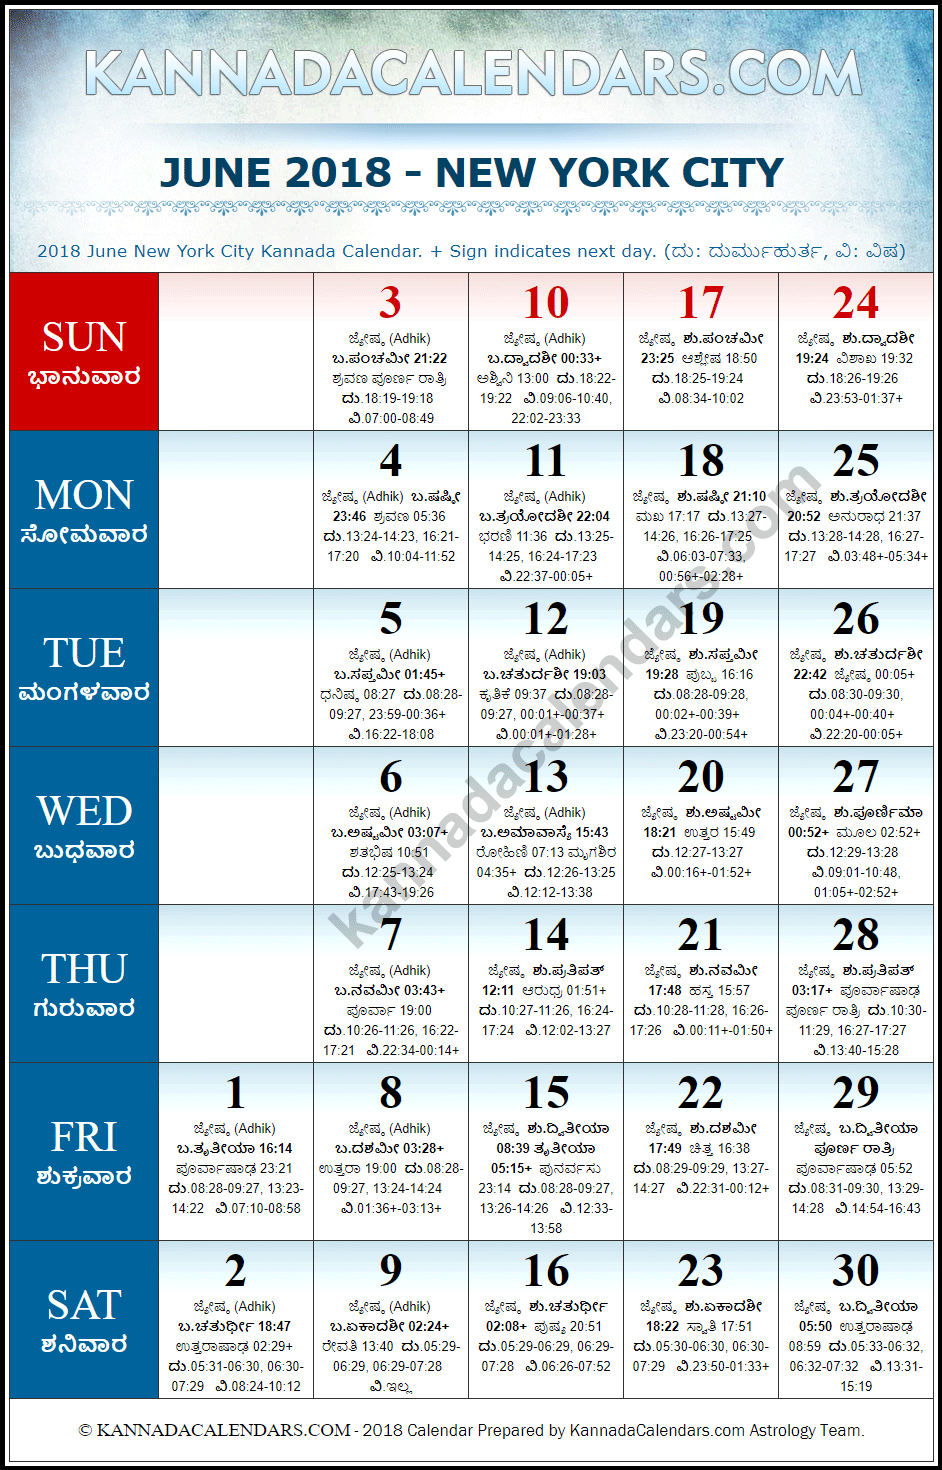 June 2018 Kannada Calendar for New York, USA